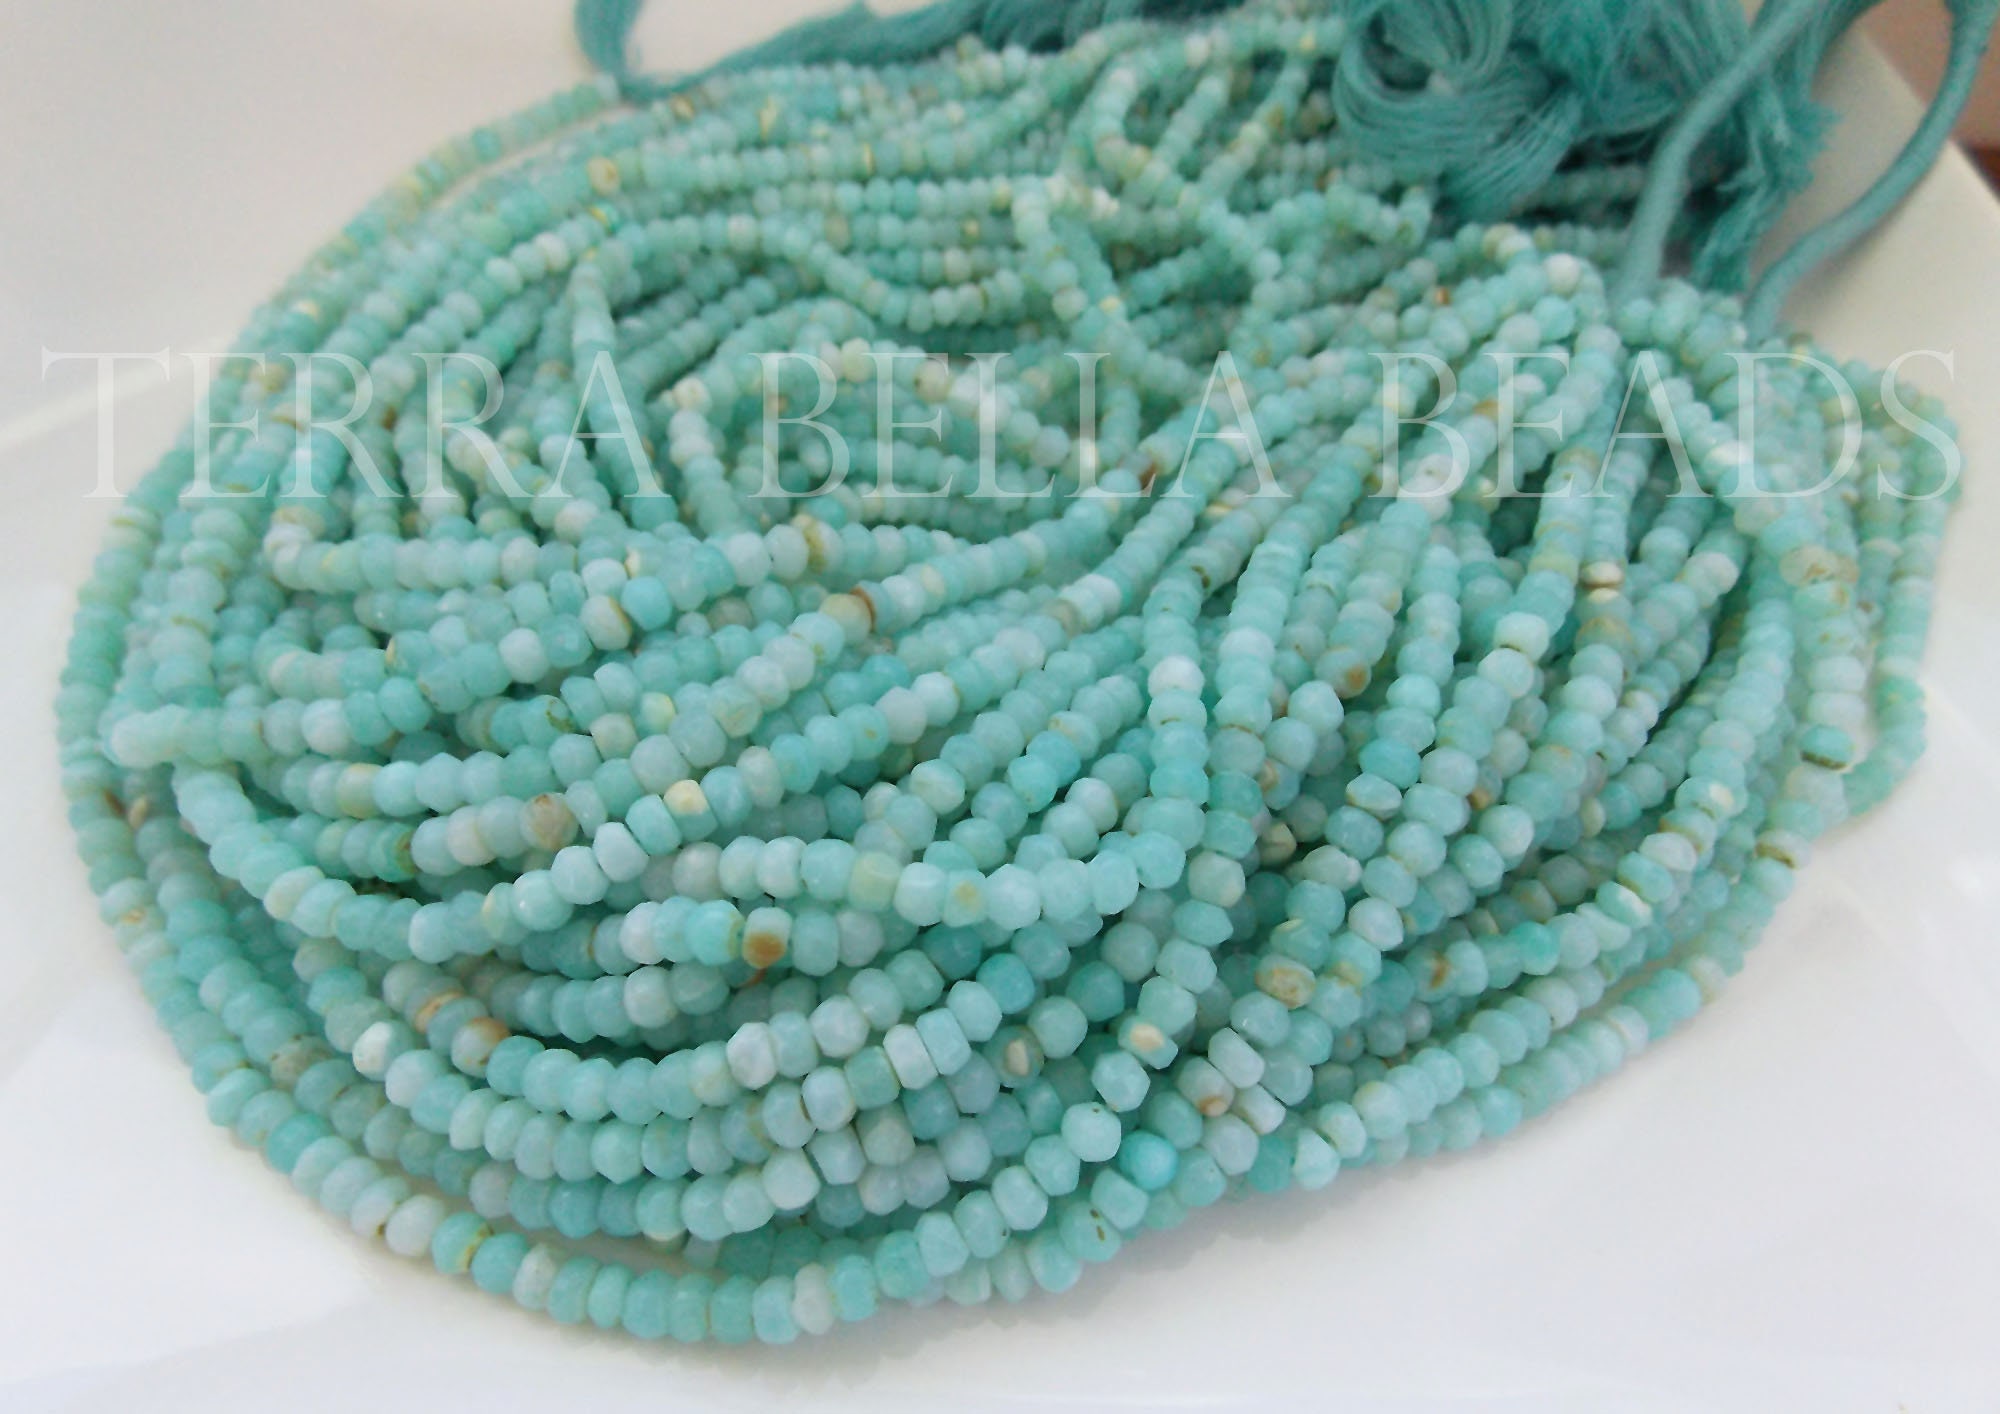 RARE GEMSTONE | Blue Peruvian Opal Gemstone Plain Roundels Beads 12 Inch  Strand Size - 6 MM Gemstone Making Jewelry | Blue Opal Beads (60+ Beads)